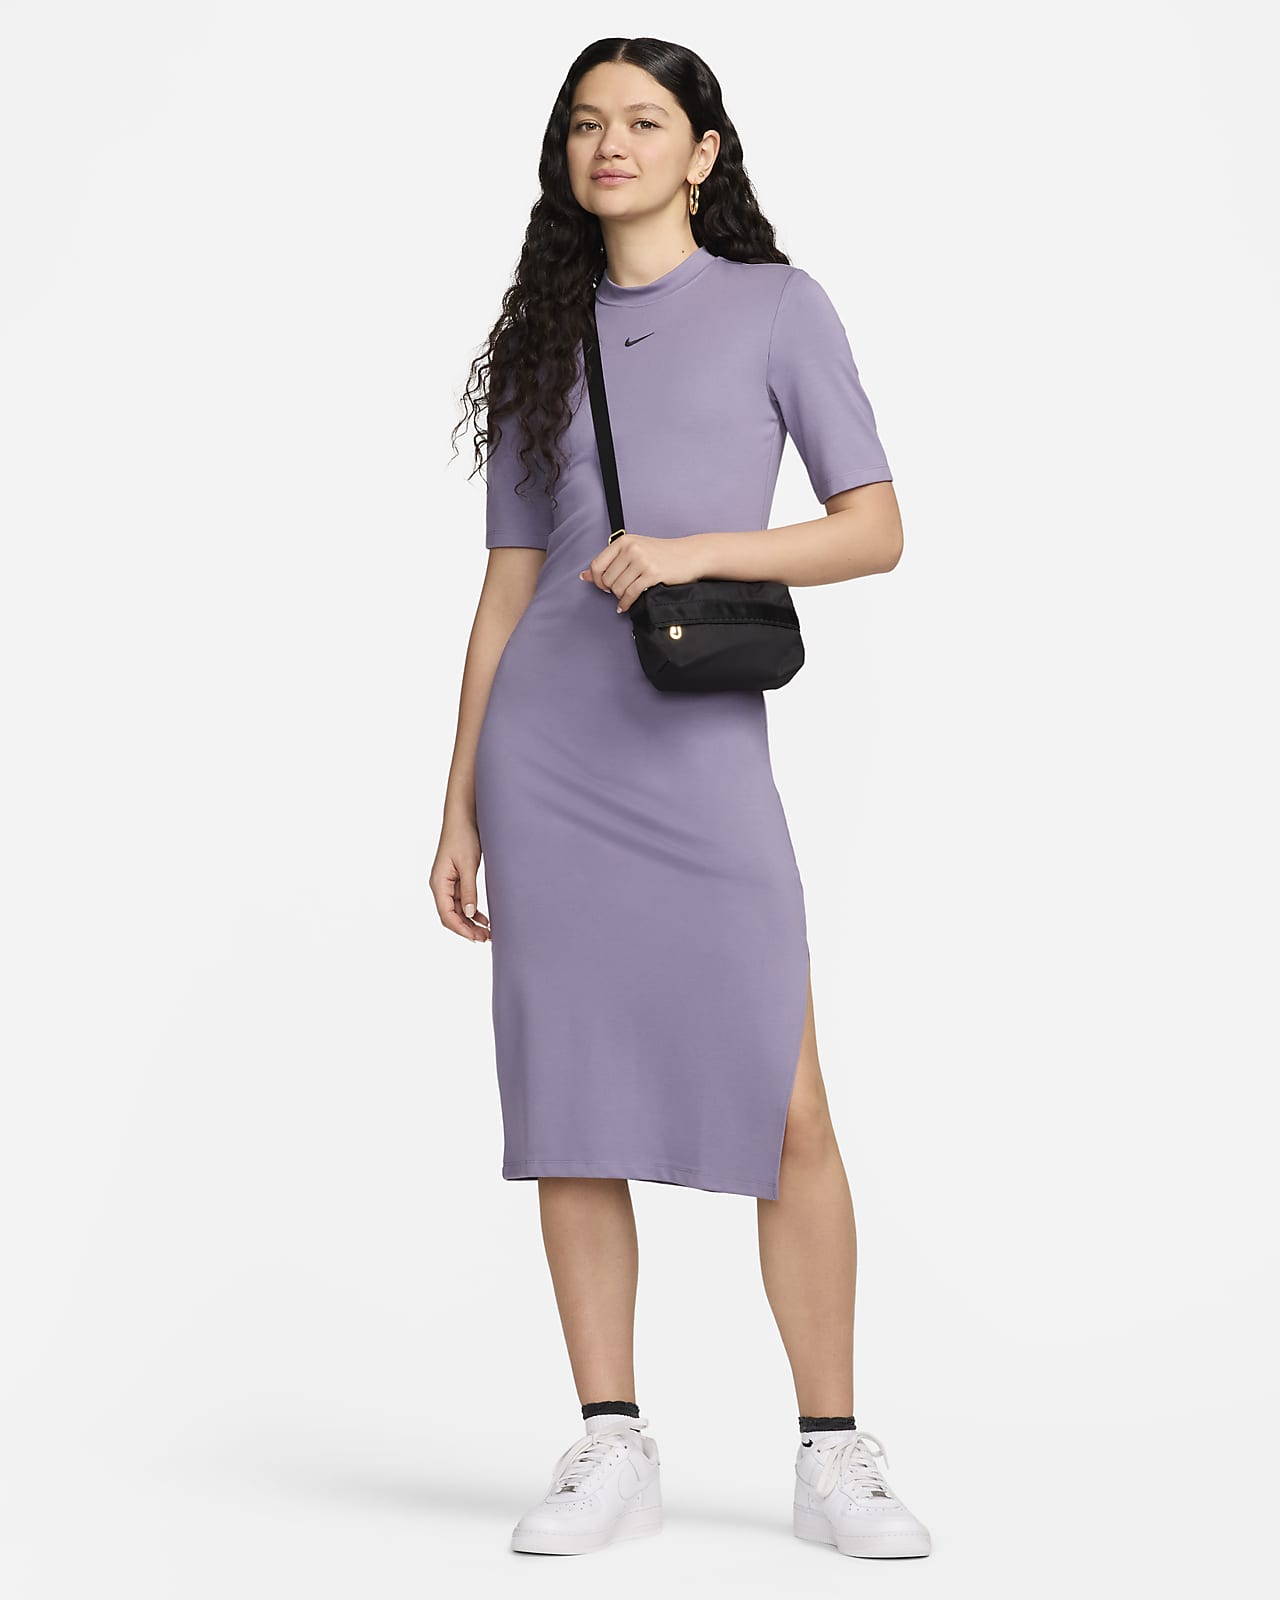 Midi Dresses | Casual to Formal Midis & Knee Length Dresses | Windsor